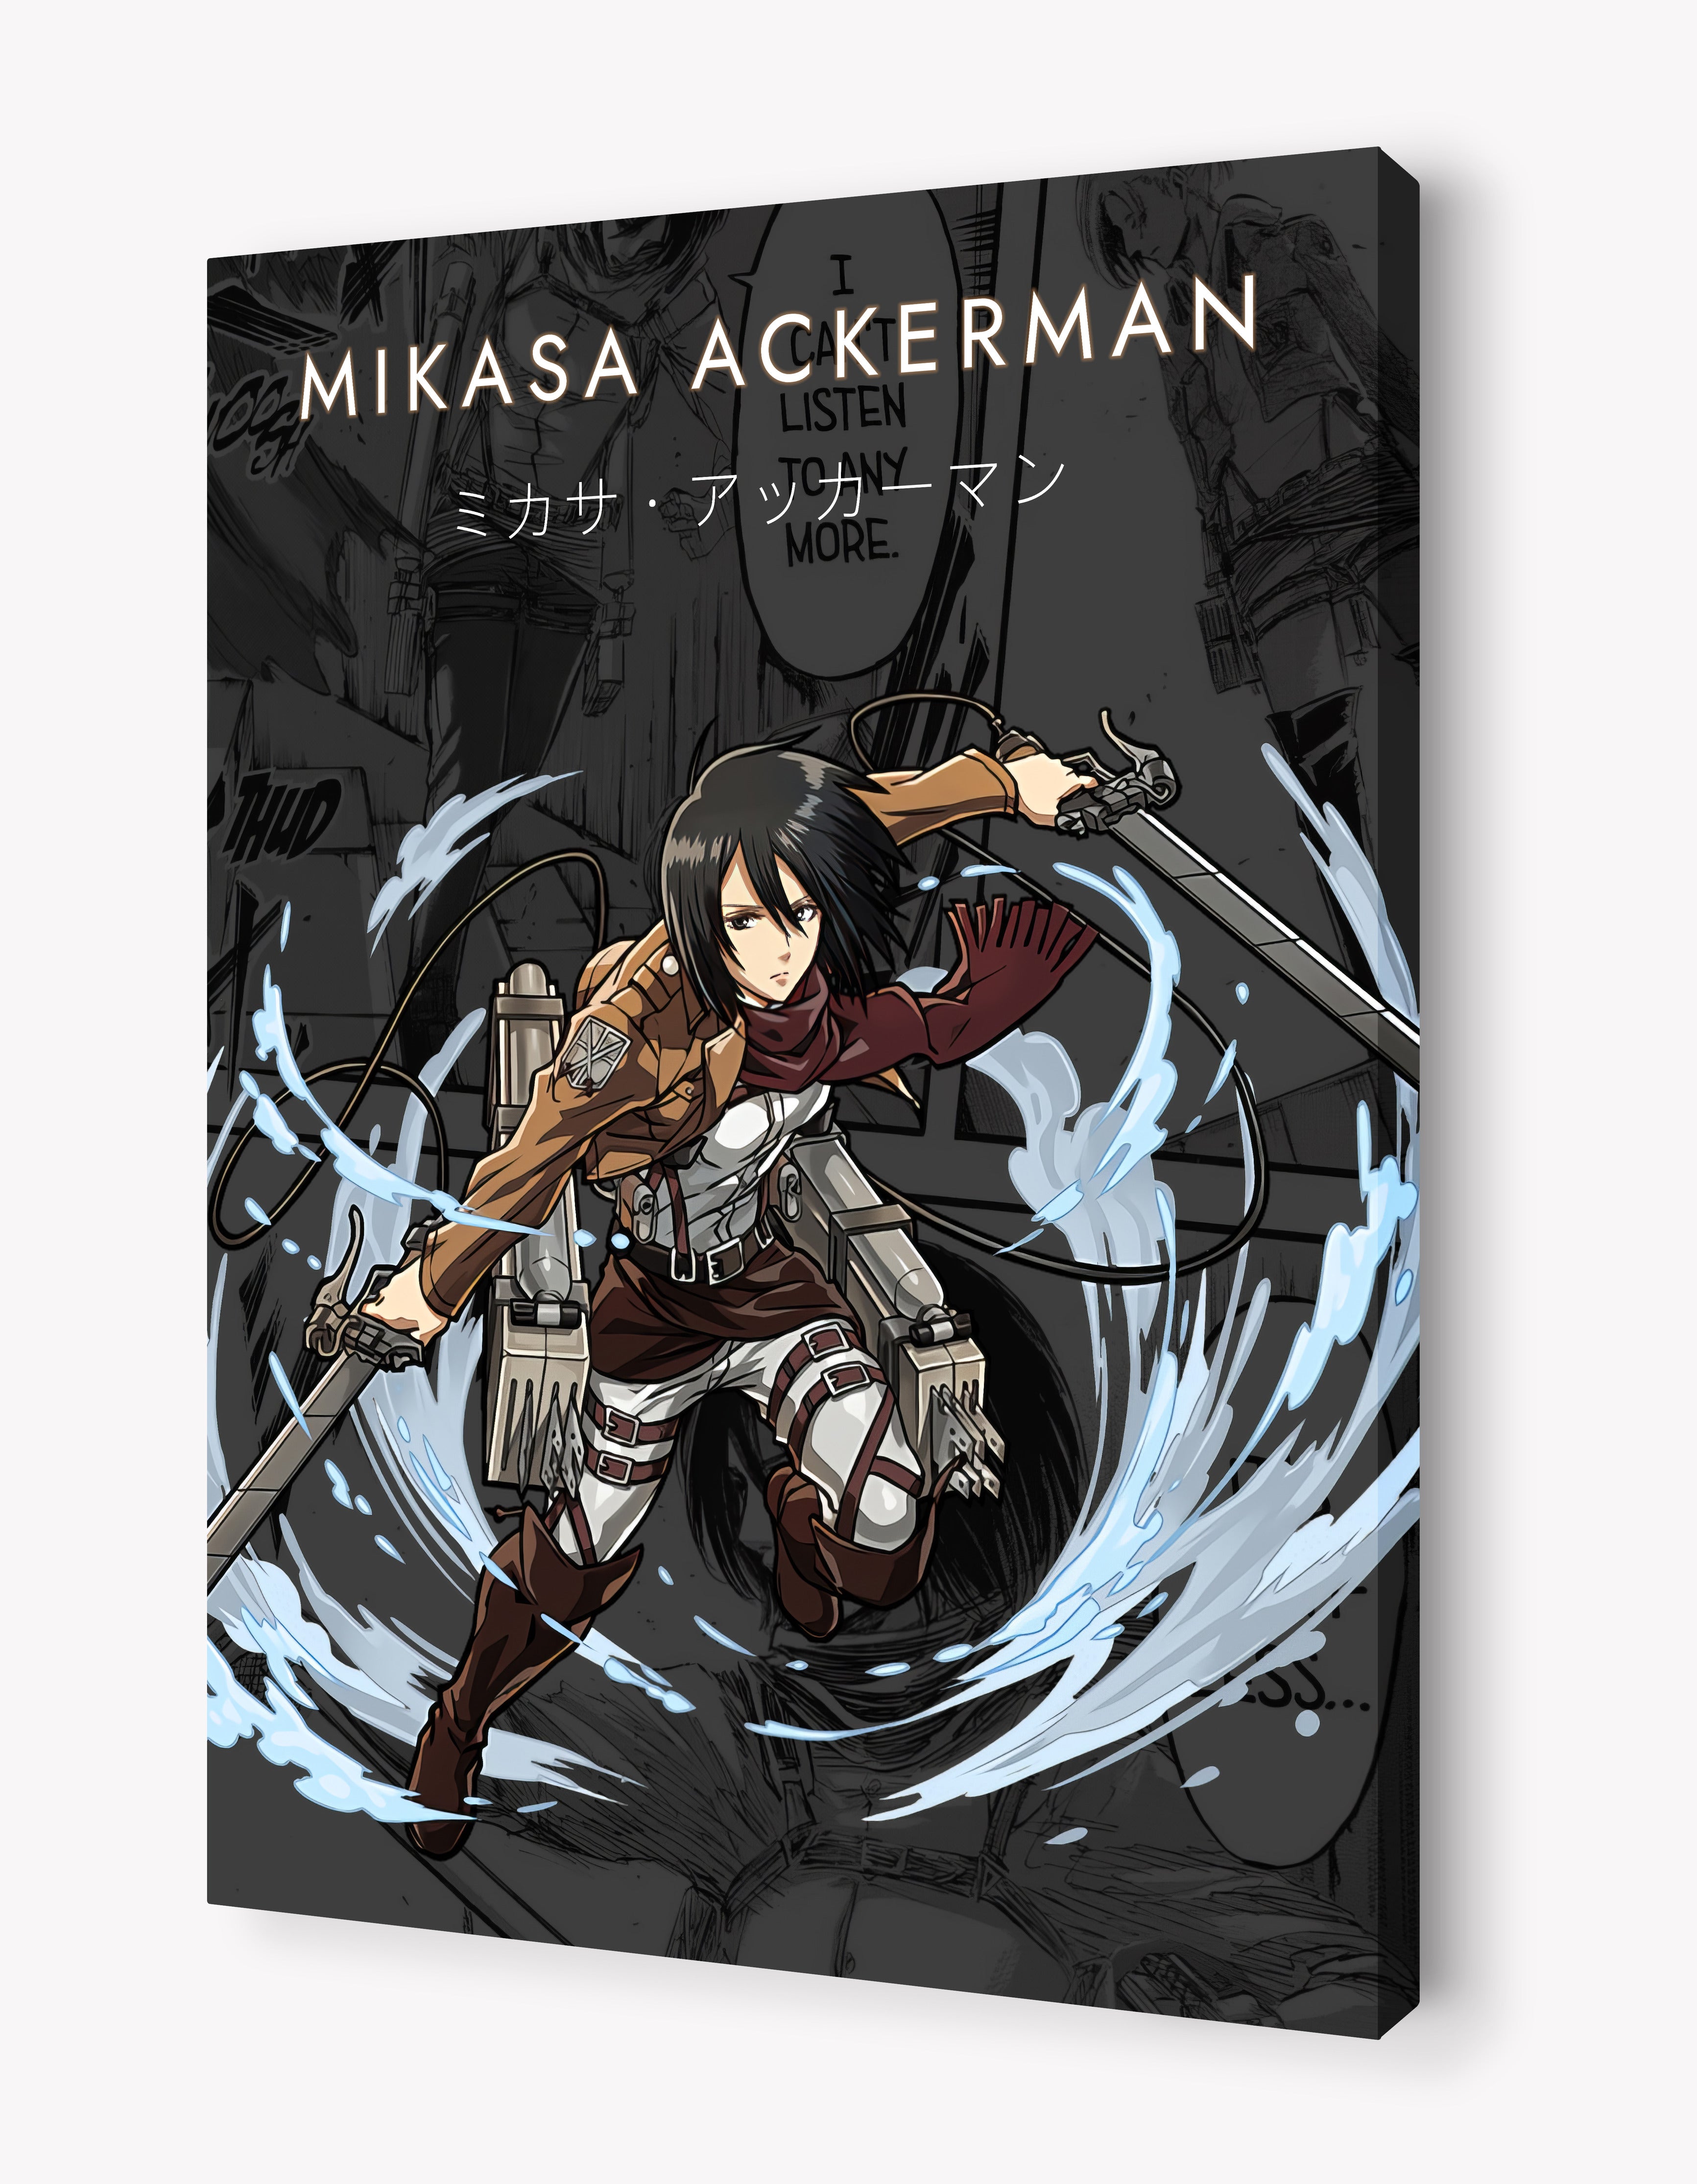 Mikasa Ackerman - Blade of Resilience